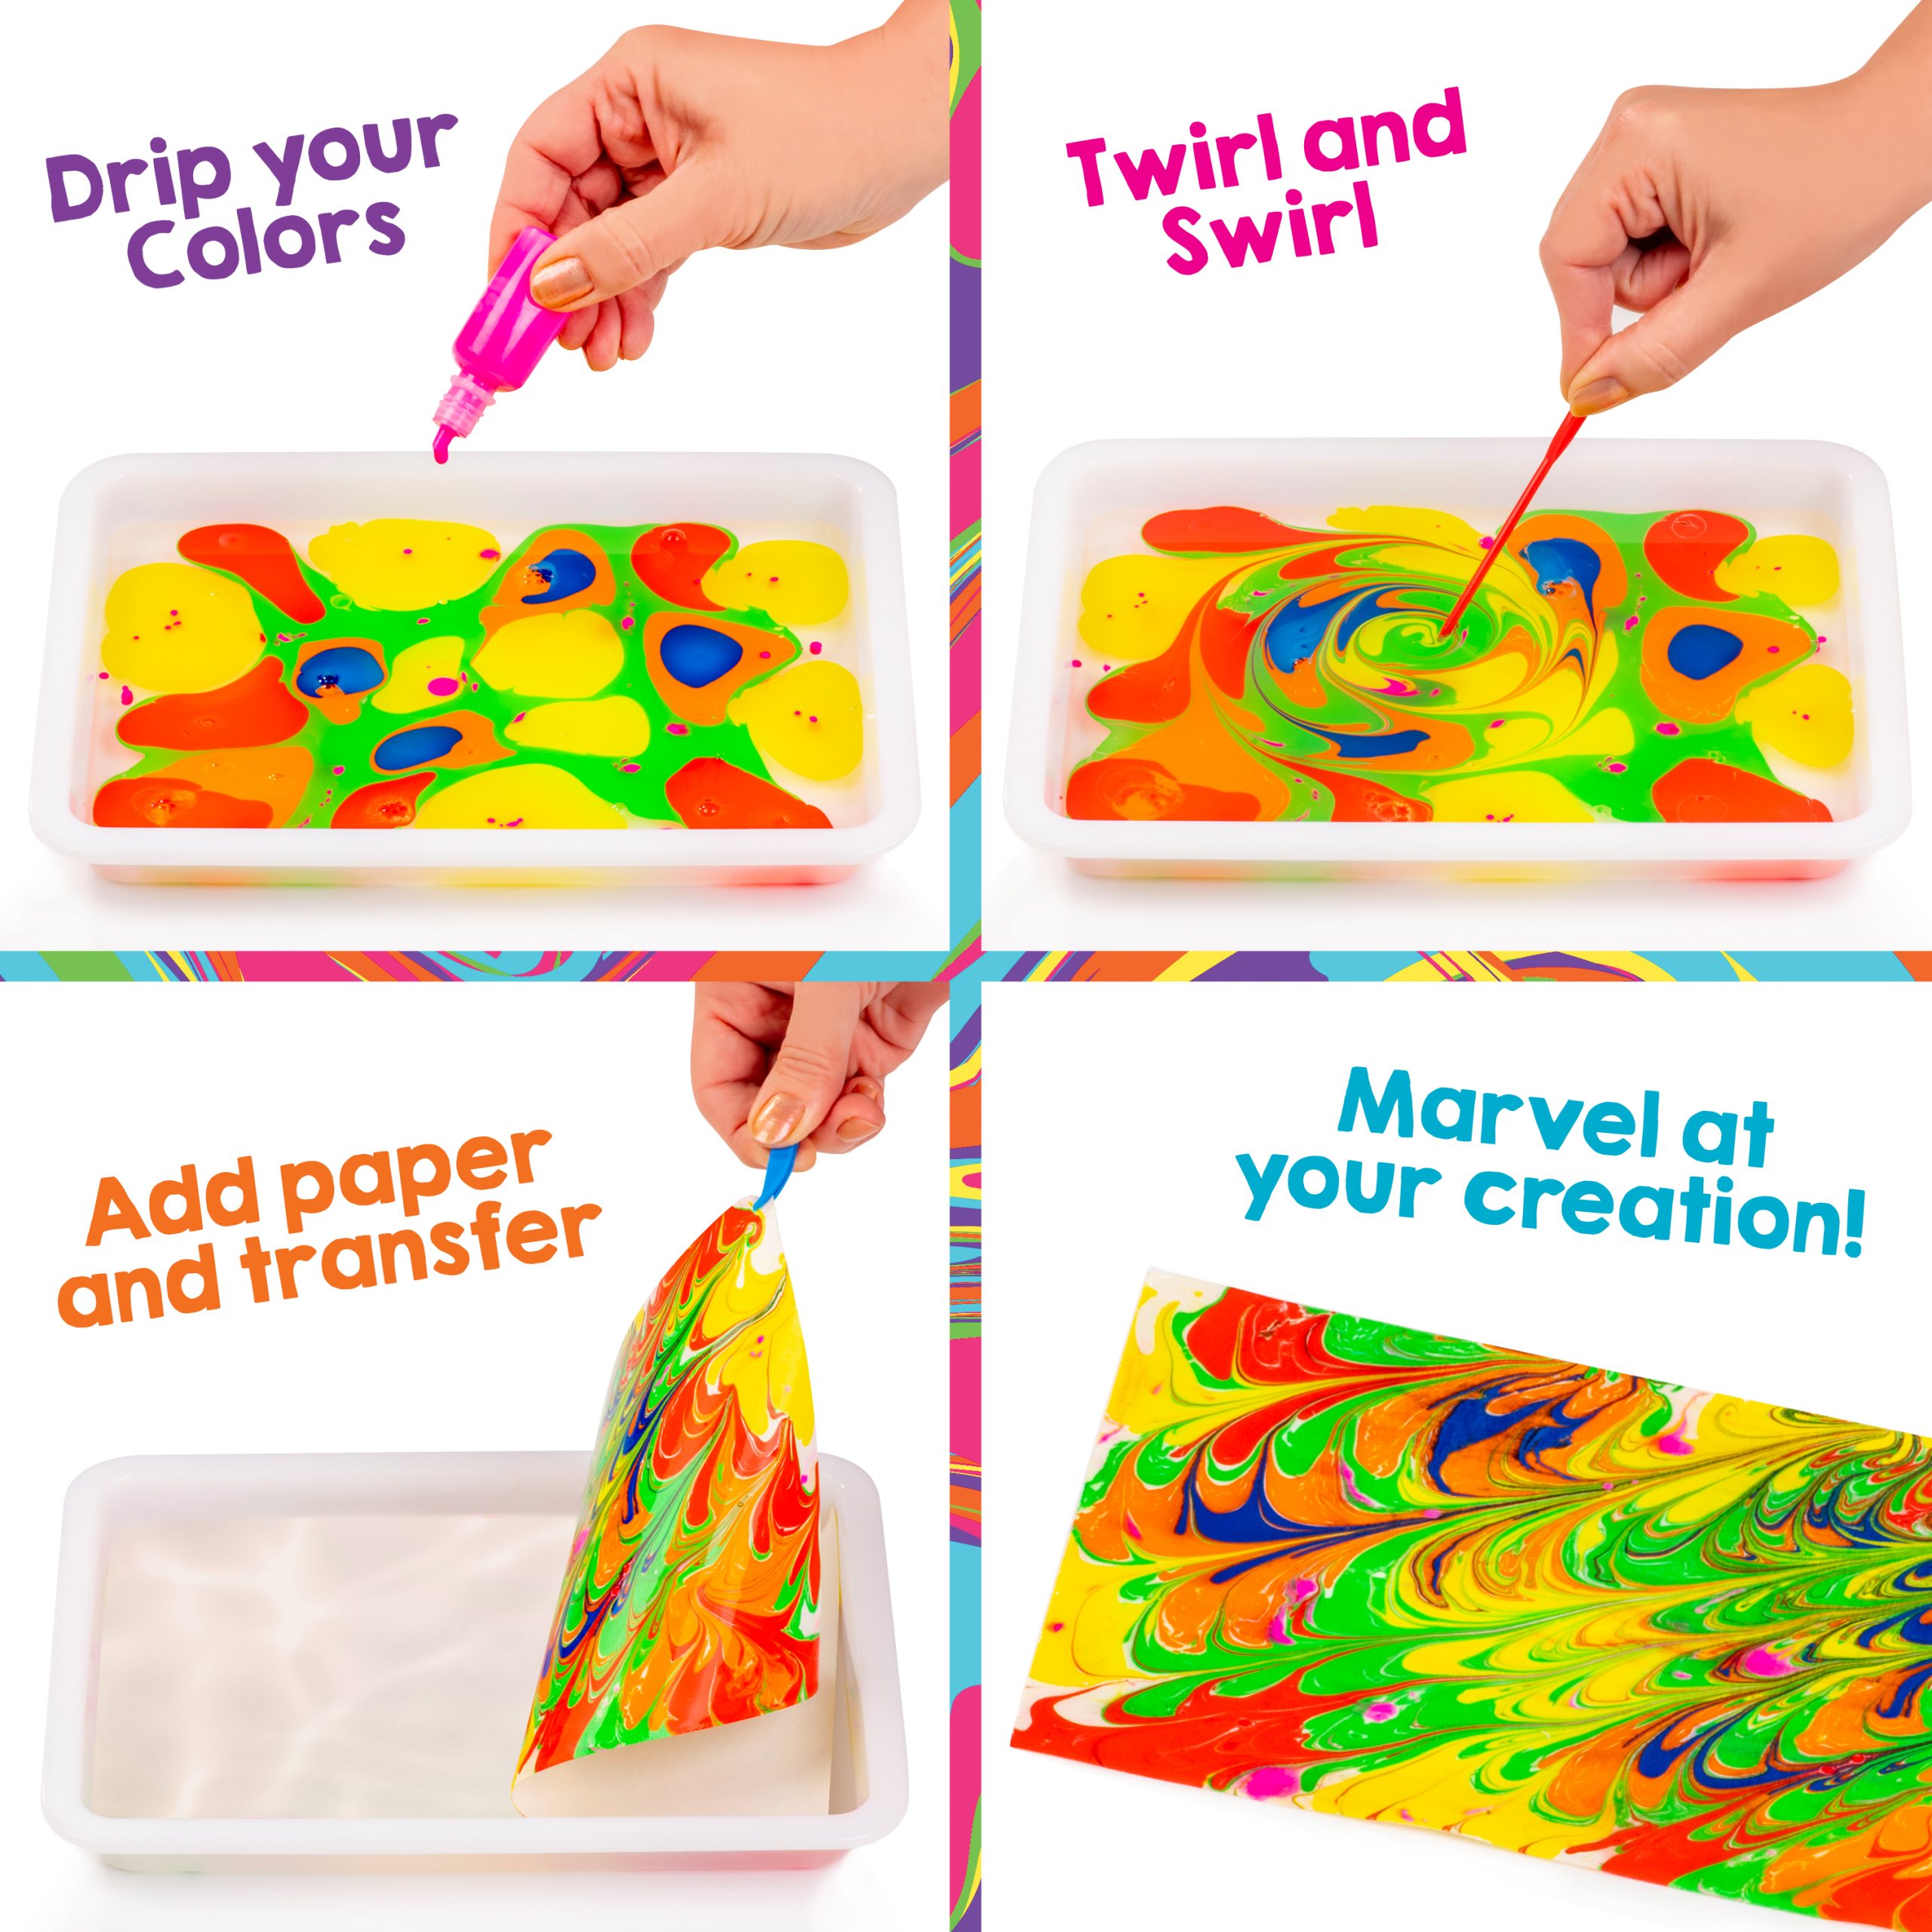 Sprinkle Art Shaker, Rainbow Arts and Crafts, Crayola.com